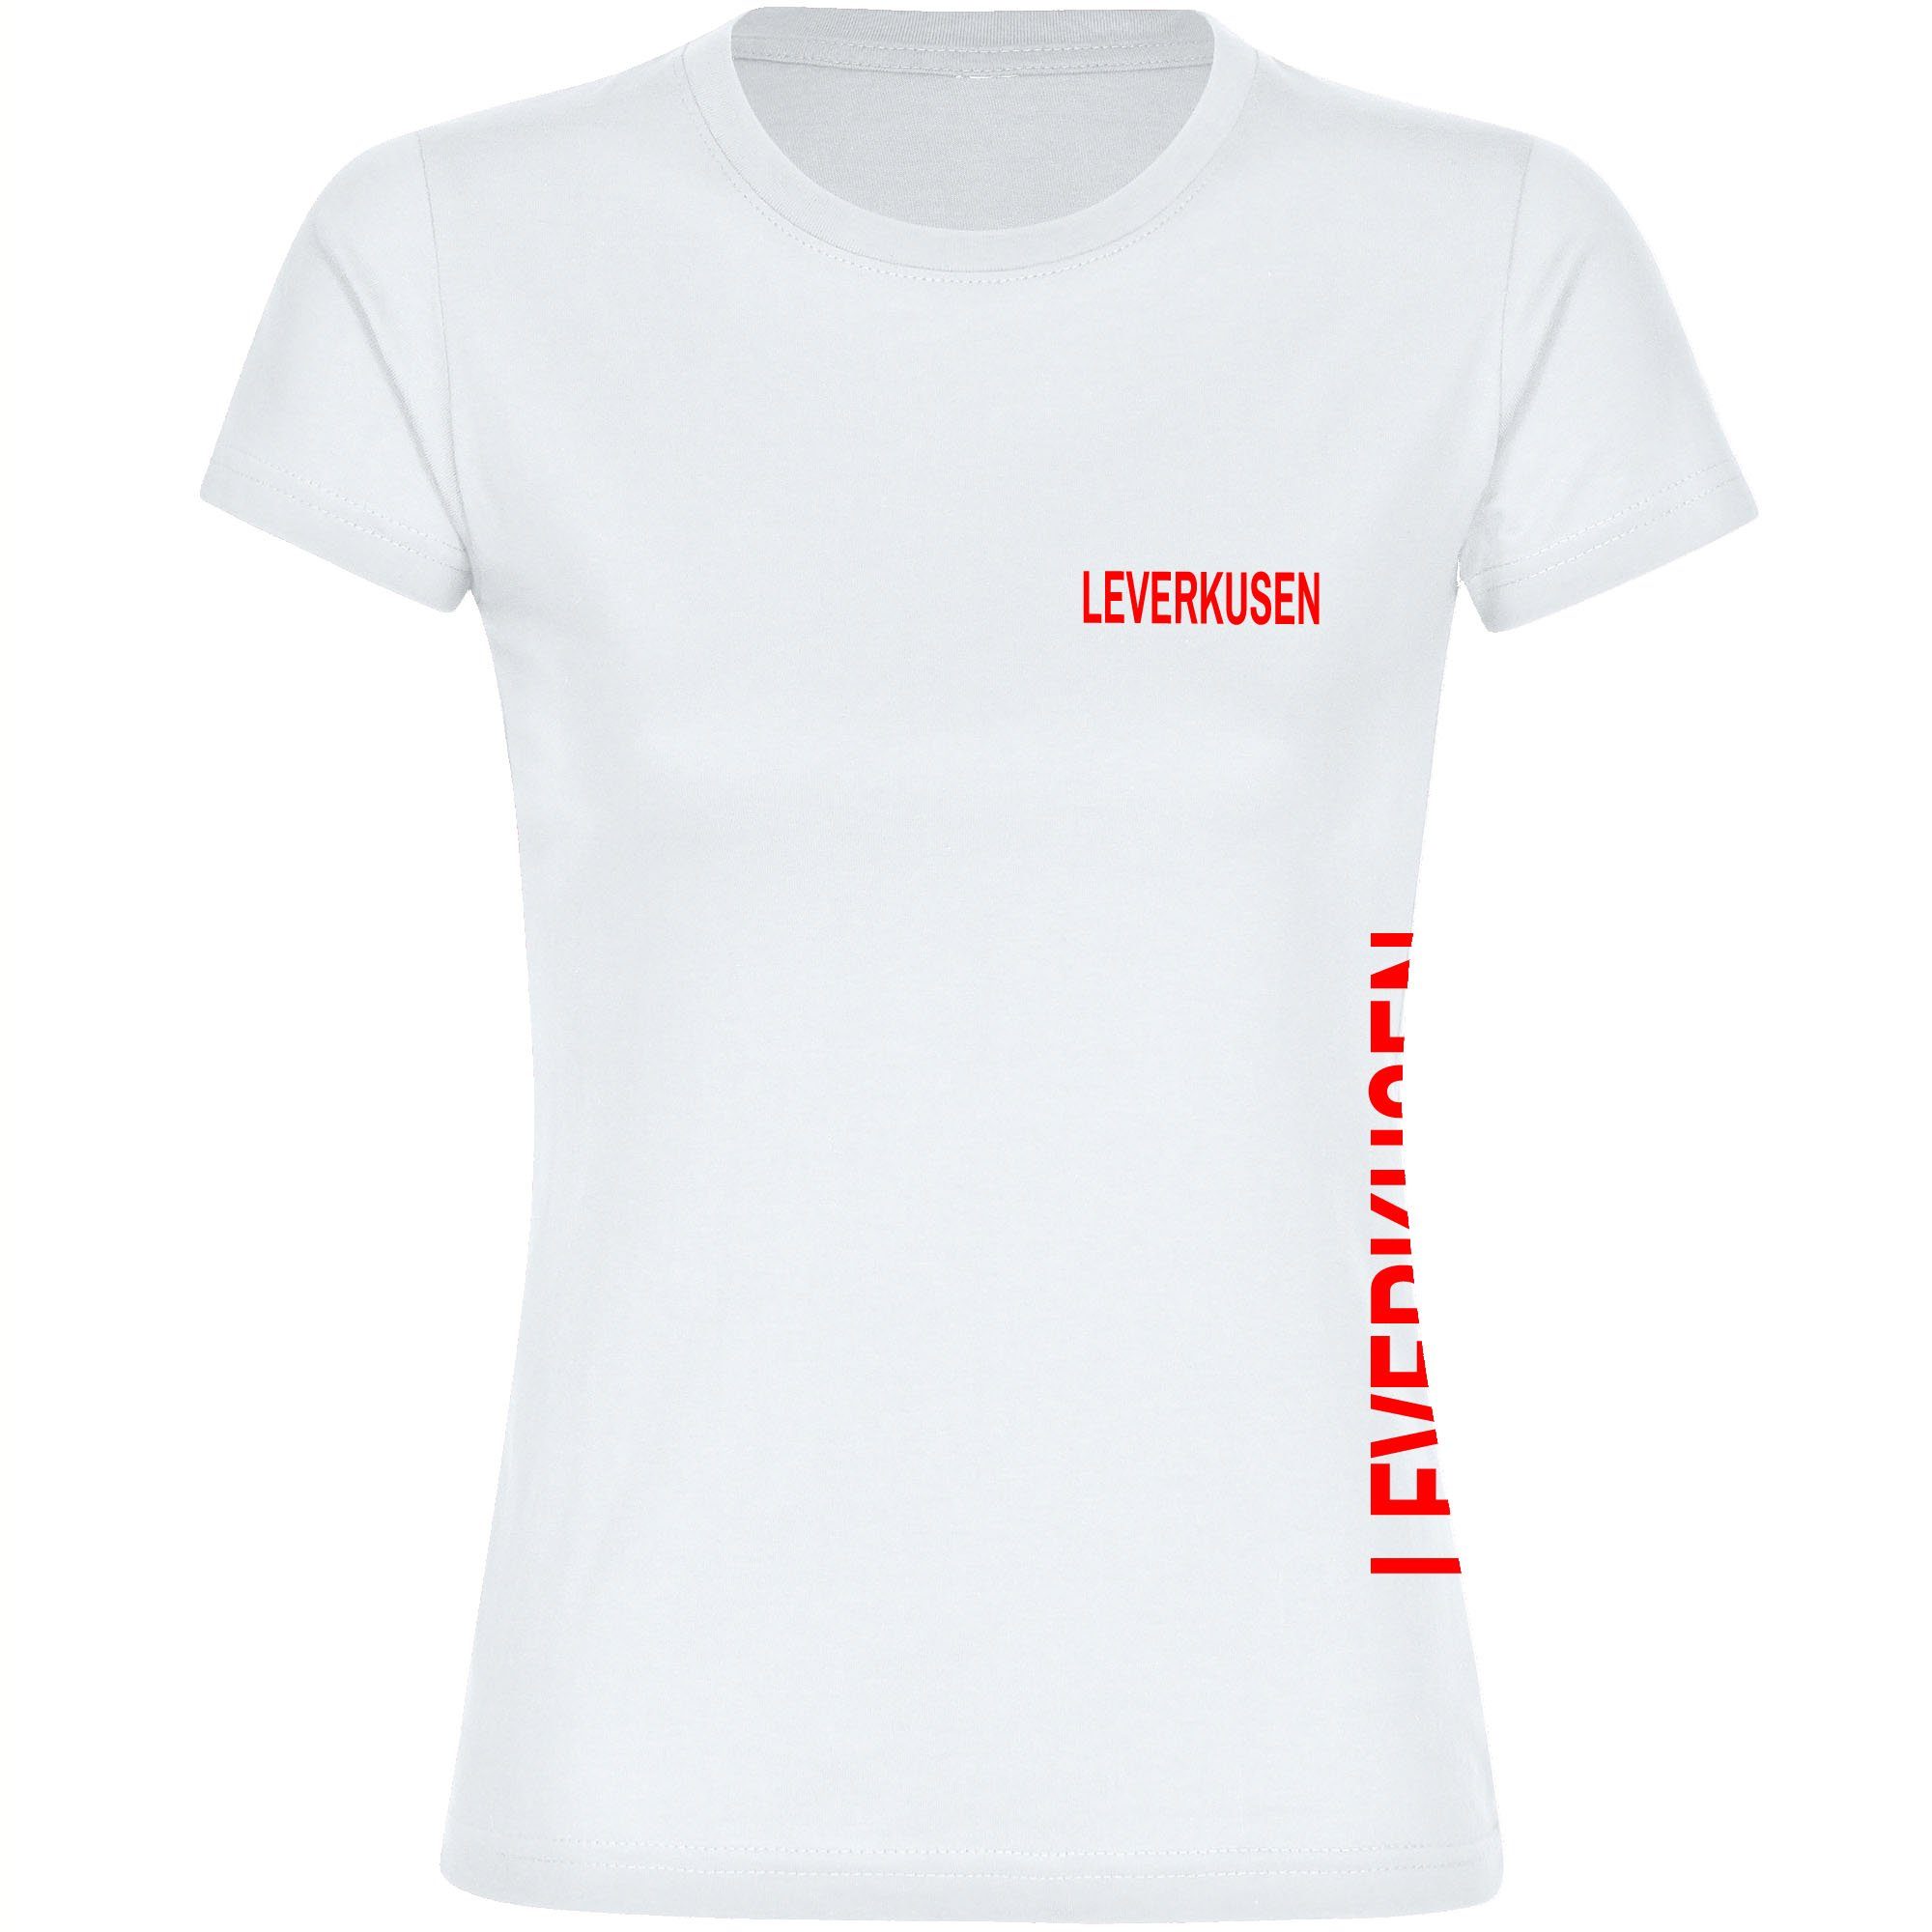 multifanshop T-Shirt Damen Leverkusen - Brust & Seite - Frauen